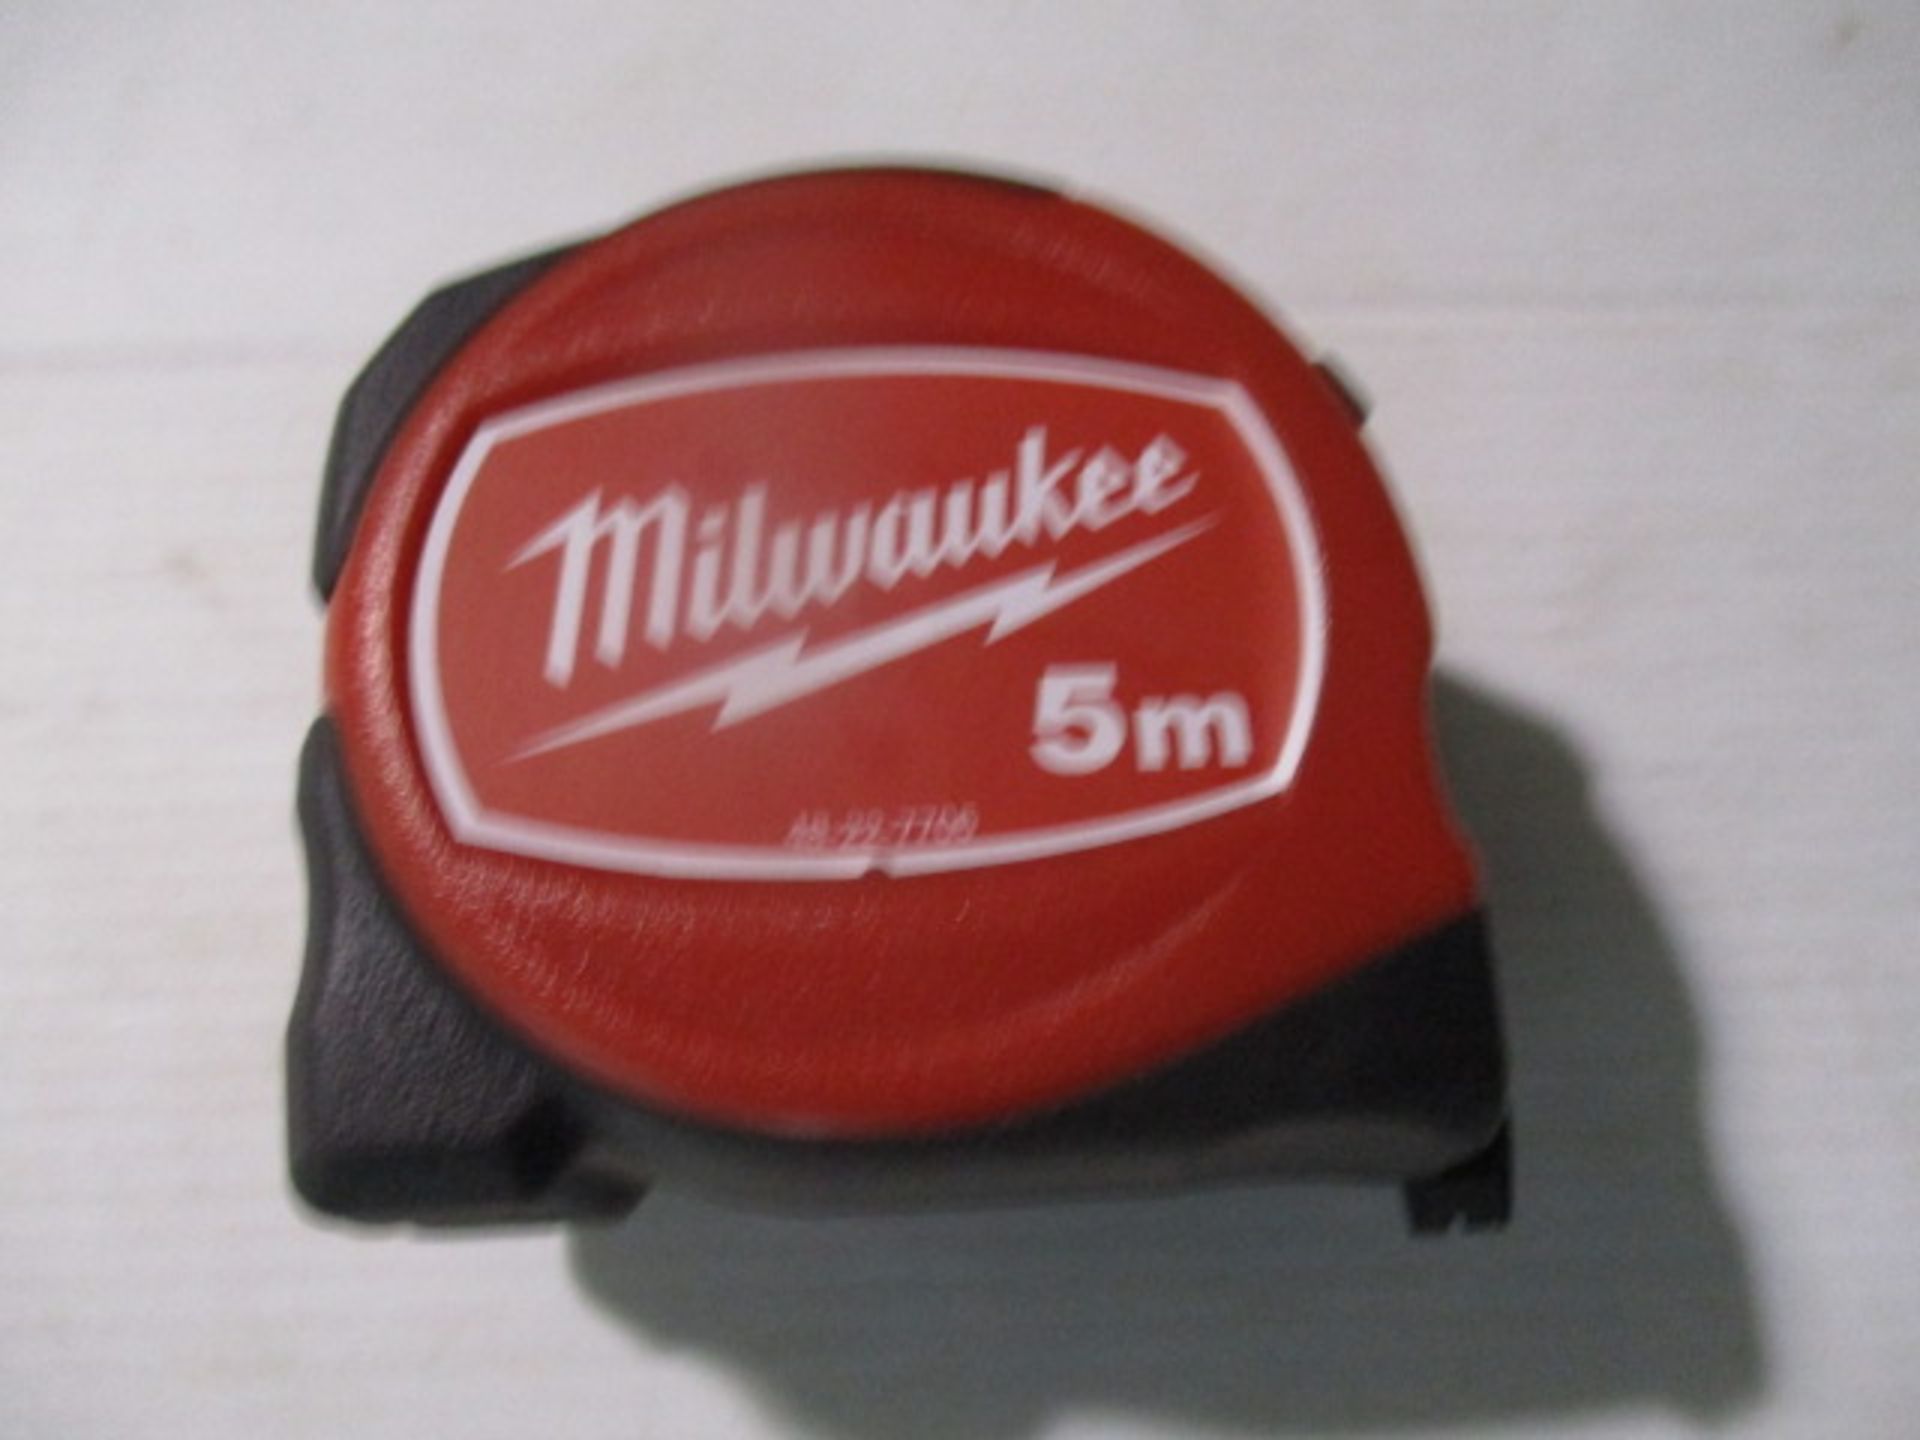 New and unused Milwaukee 5 Metre heavy duty Tape measure design may vary new and unused